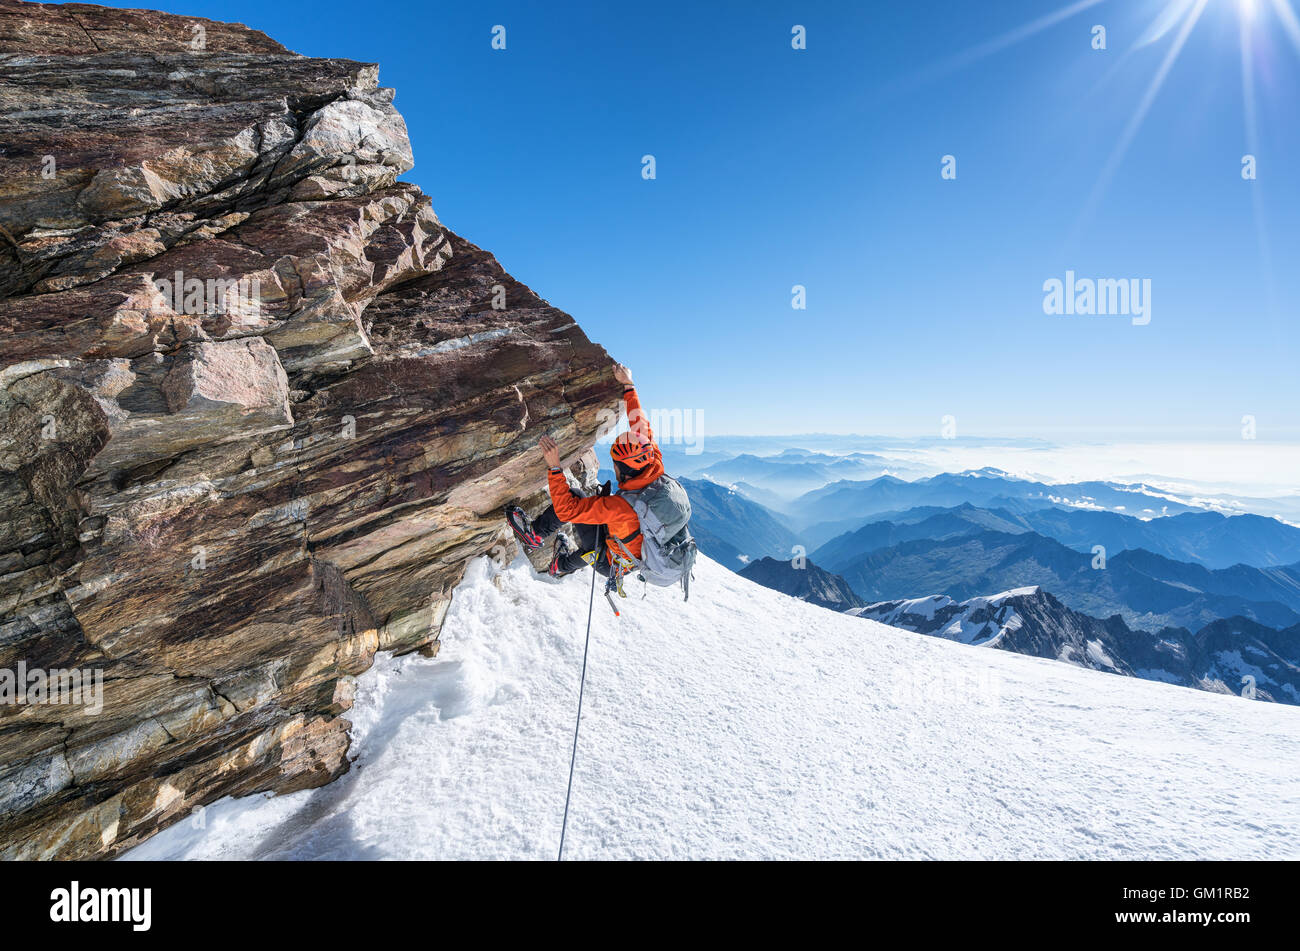 High altitude bouldering at Parrotspitze mountain, Monte Rosa Massive, Italy, Alps, Europe, EU Stock Photo